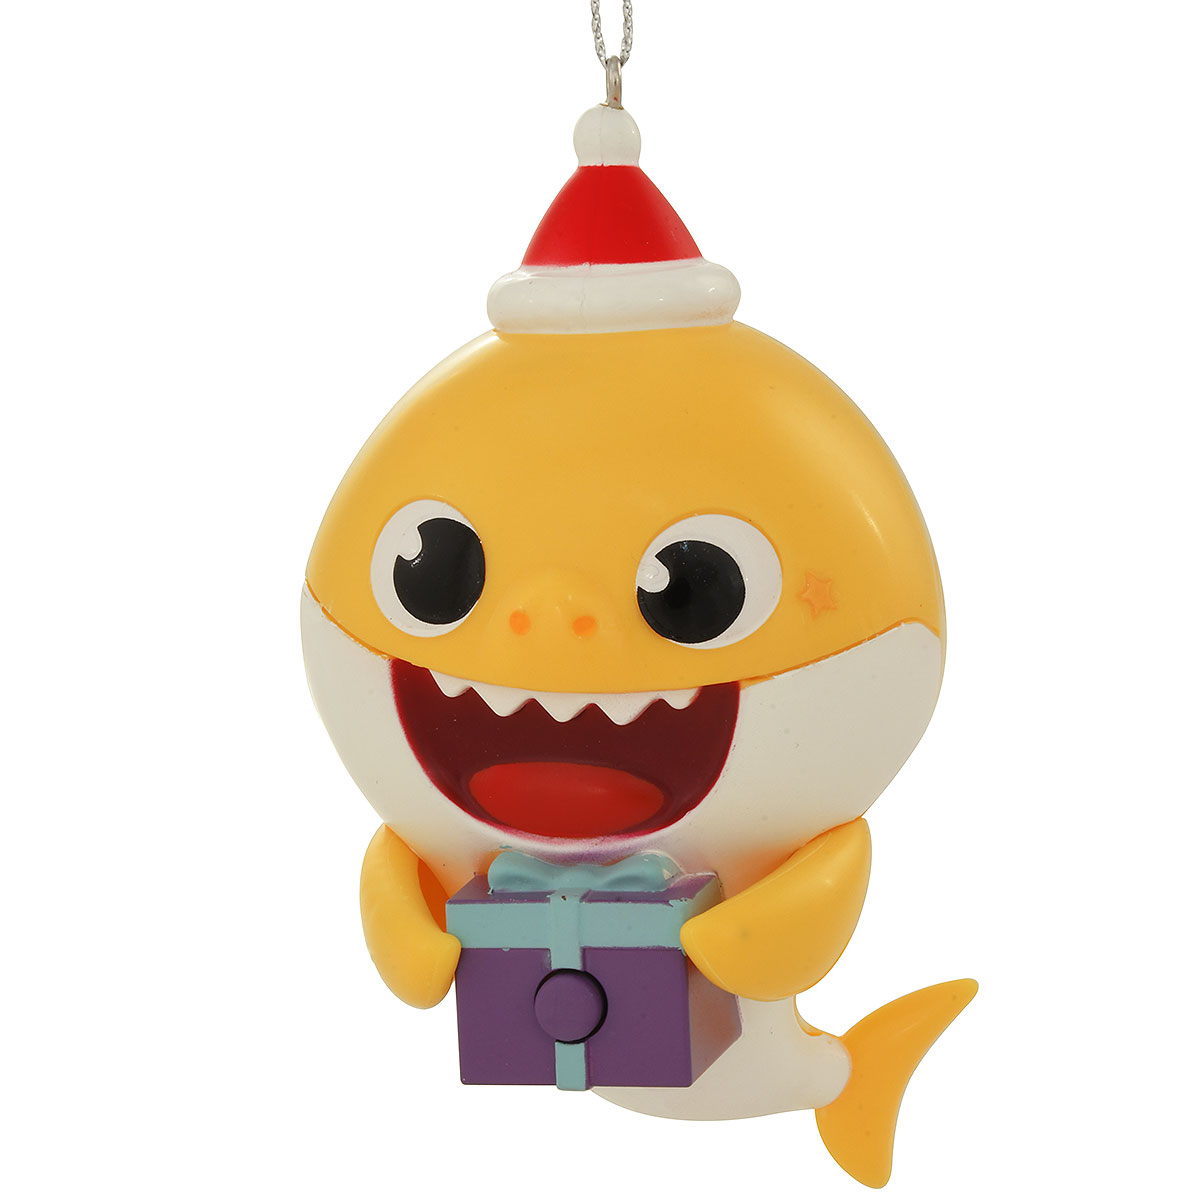 Baby Shark Ornament With Soundbite